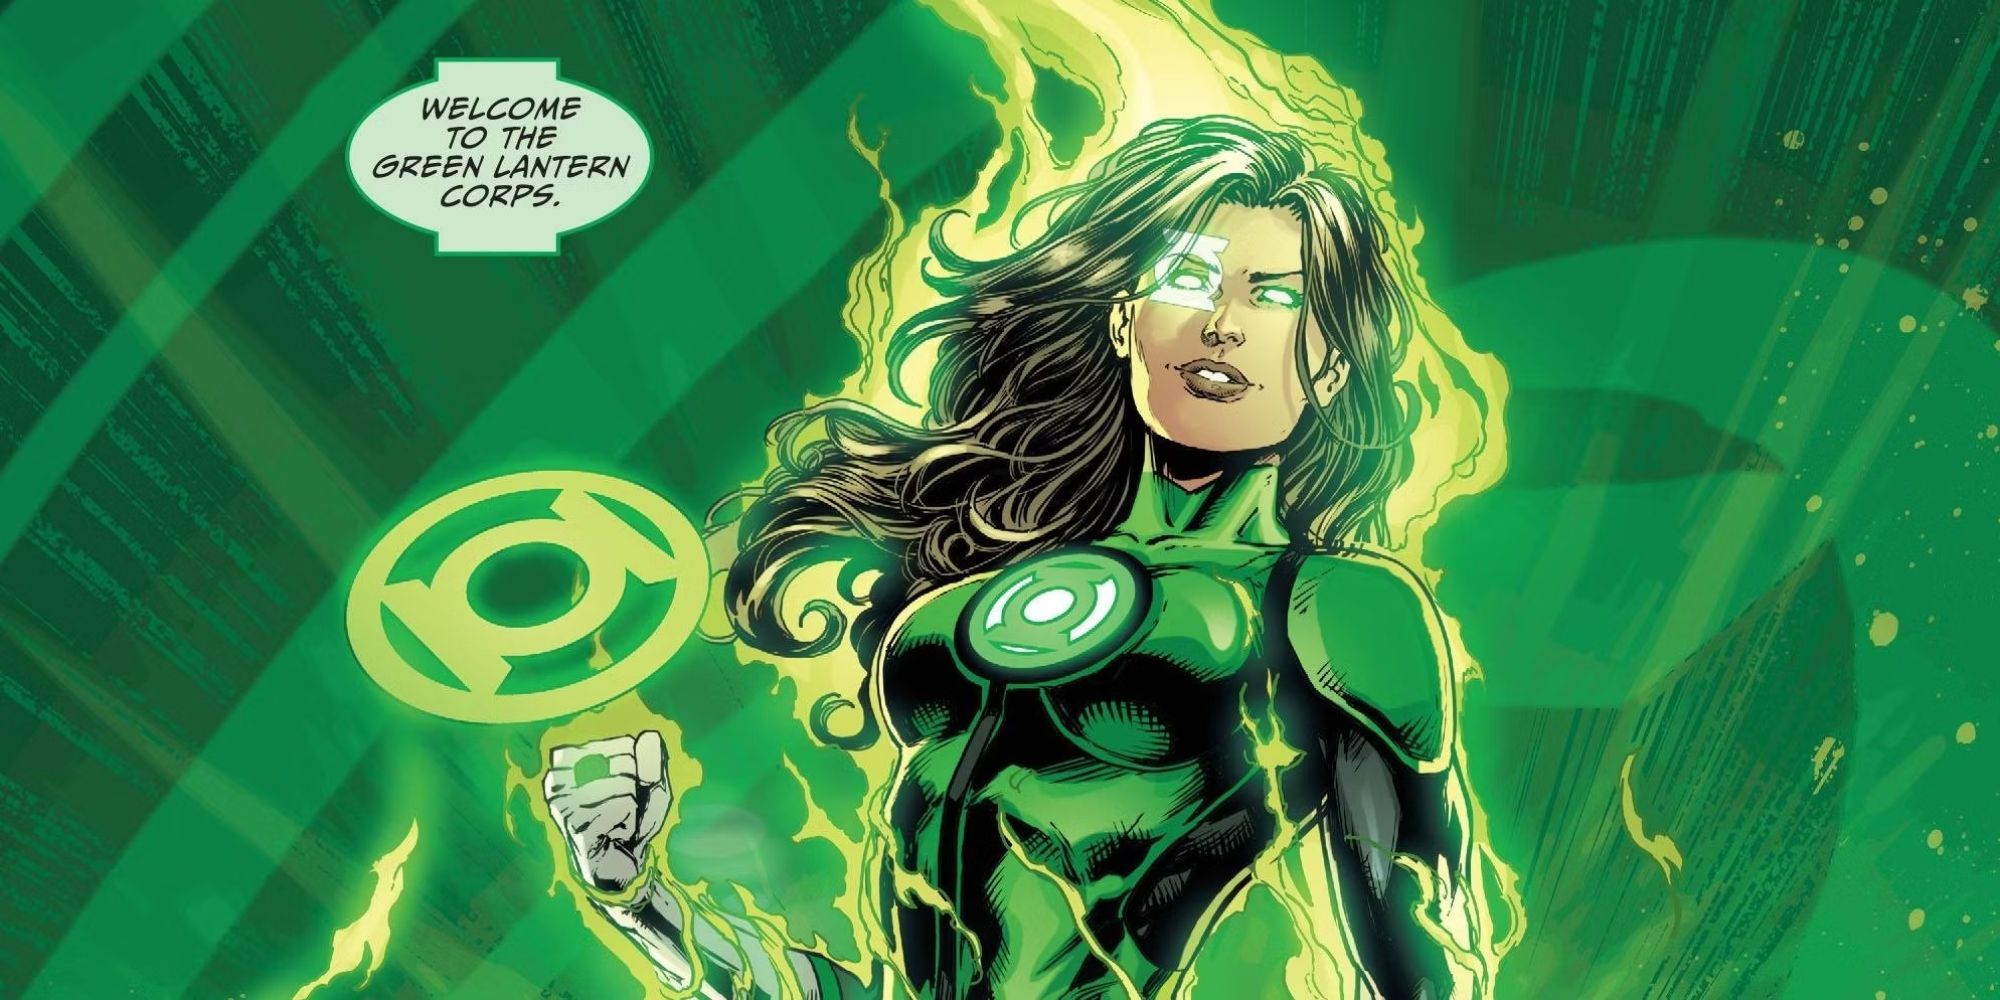 Jessica Cruz welcoming someone to the Green Lantern Corp in DC Comics